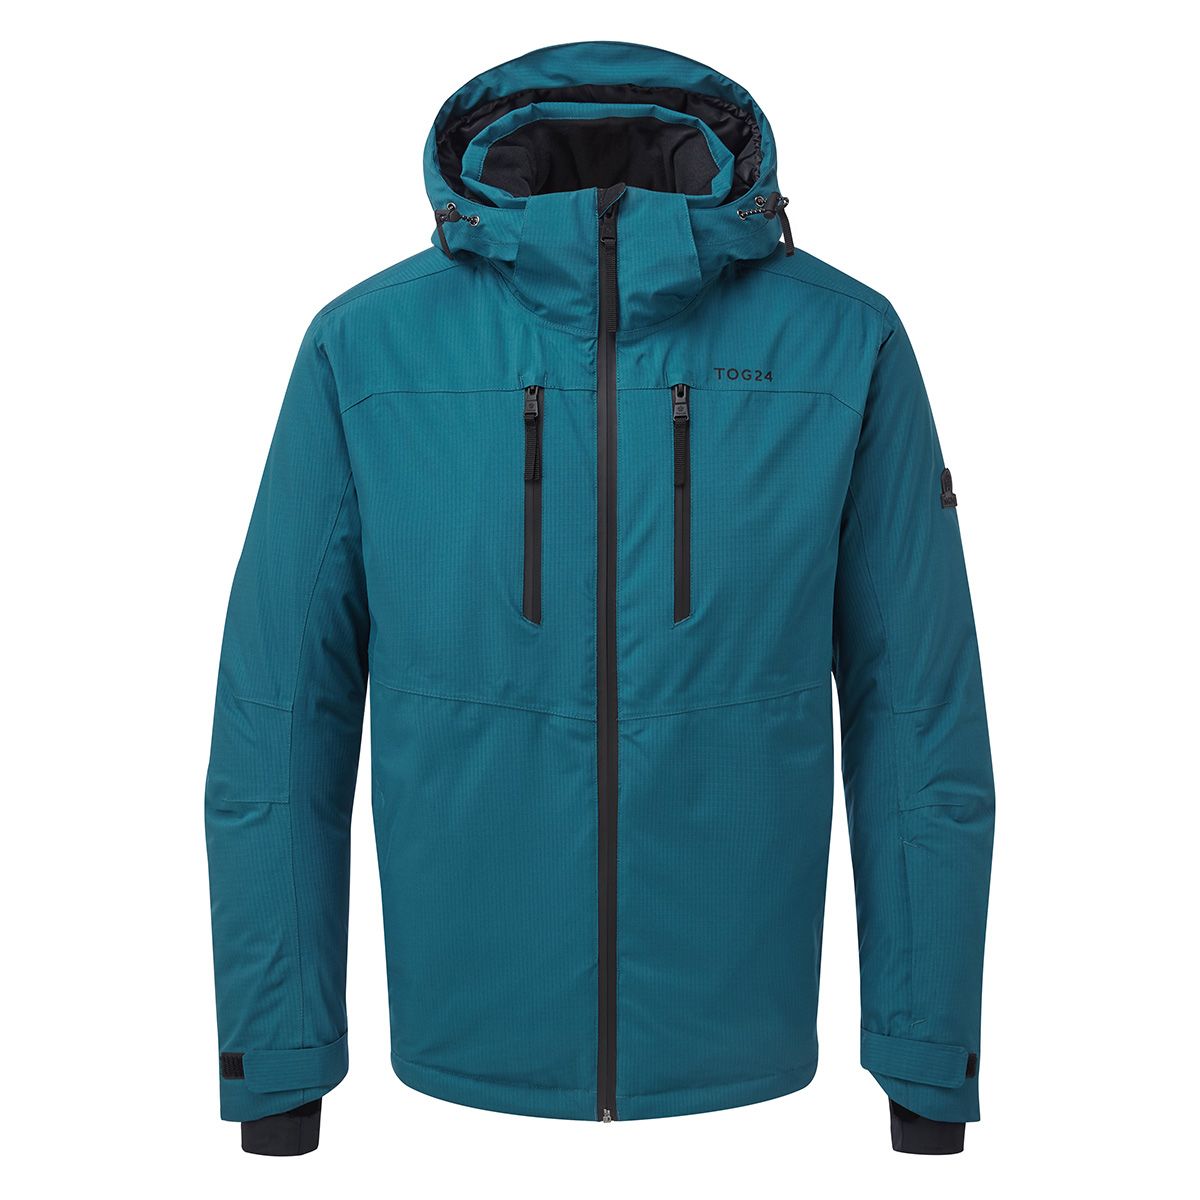 Waterproof Ski Jacket - Jackets